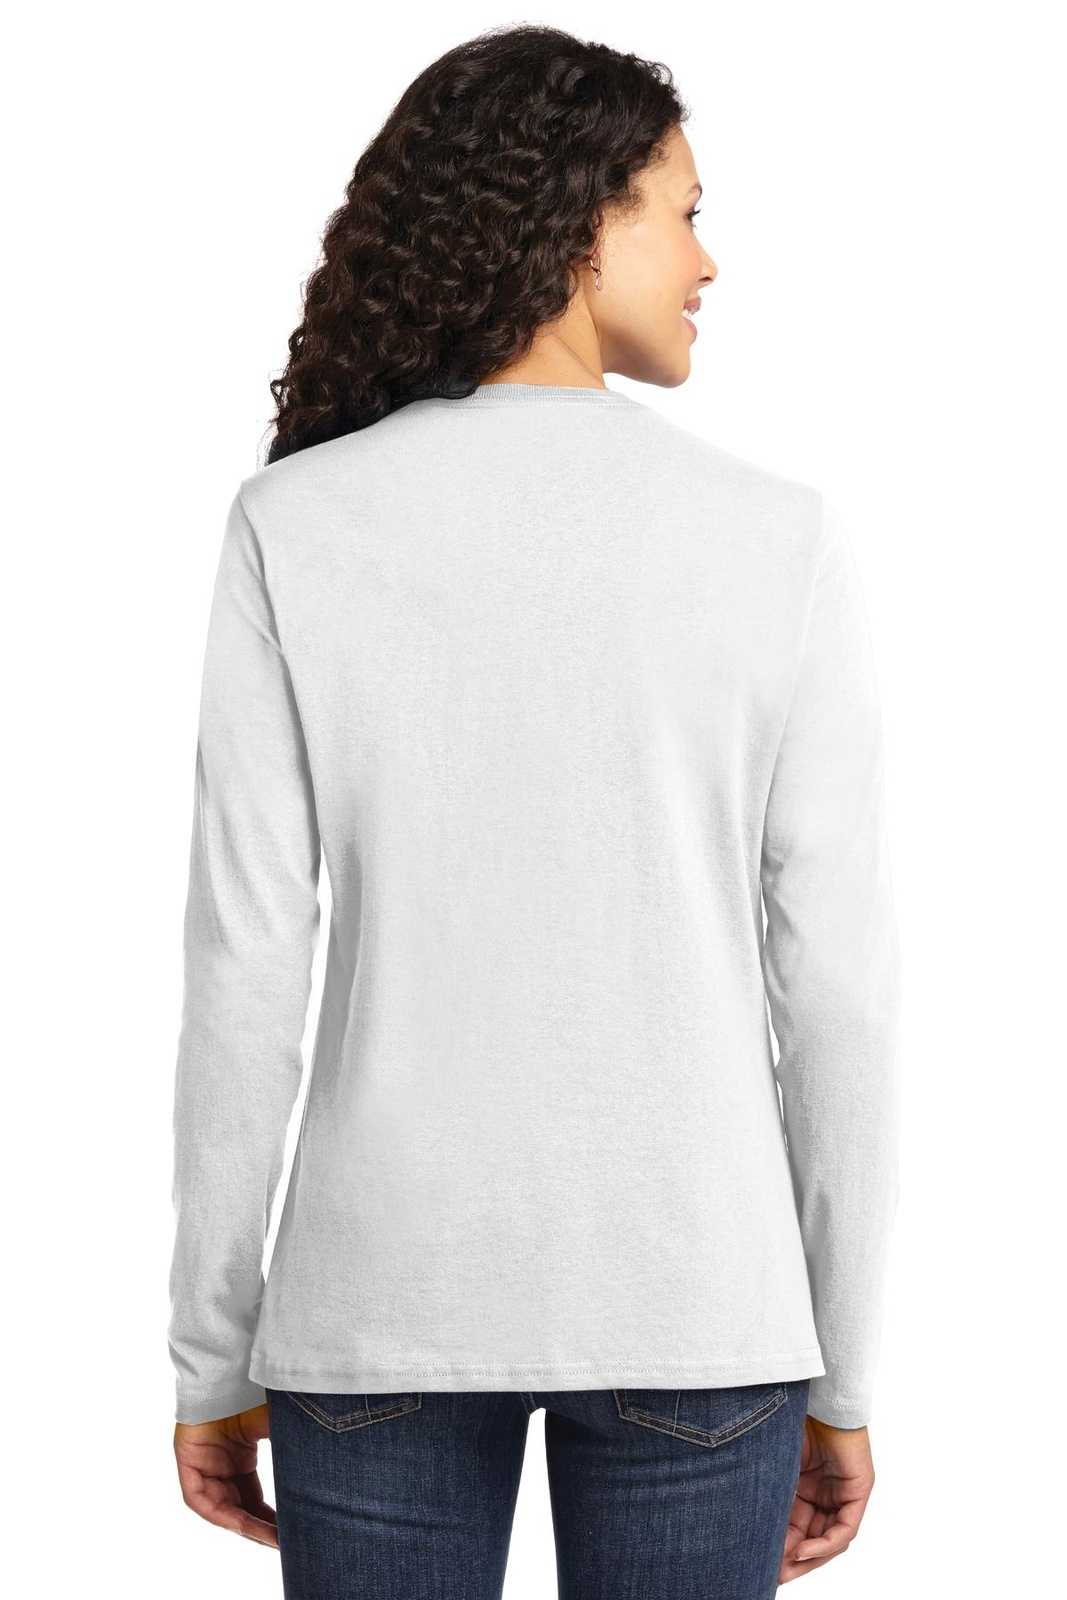 Port &amp; Company LPC54LS Ladies Long Sleeve Core Cotton Tee - White - HIT a Double - 2